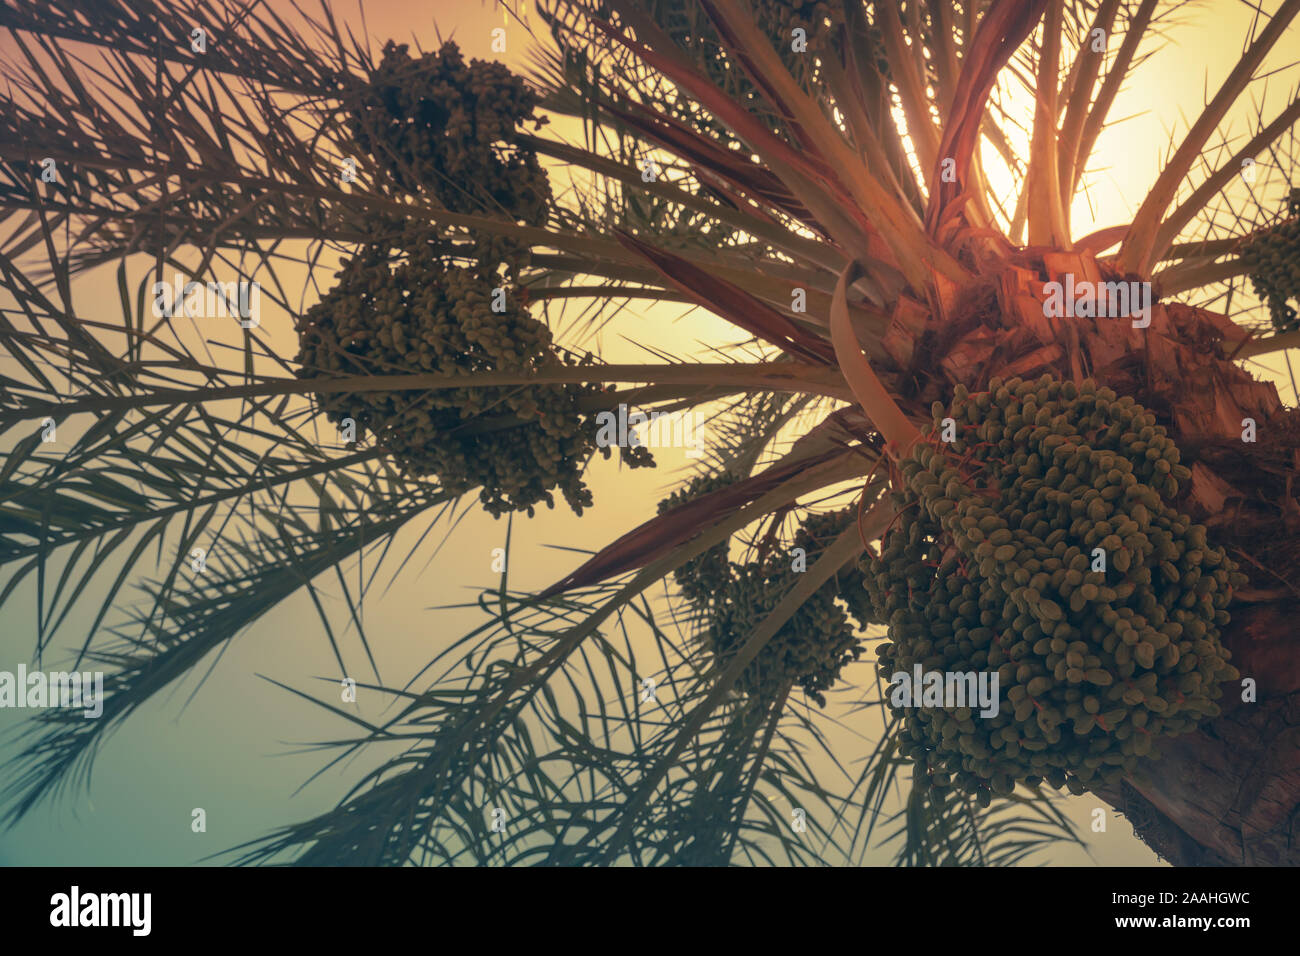 Grüne Termine auf eine Palme, Nahaufnahme Foto mit selektiven Fokus und tonalen Filter Korrektur Stockfoto